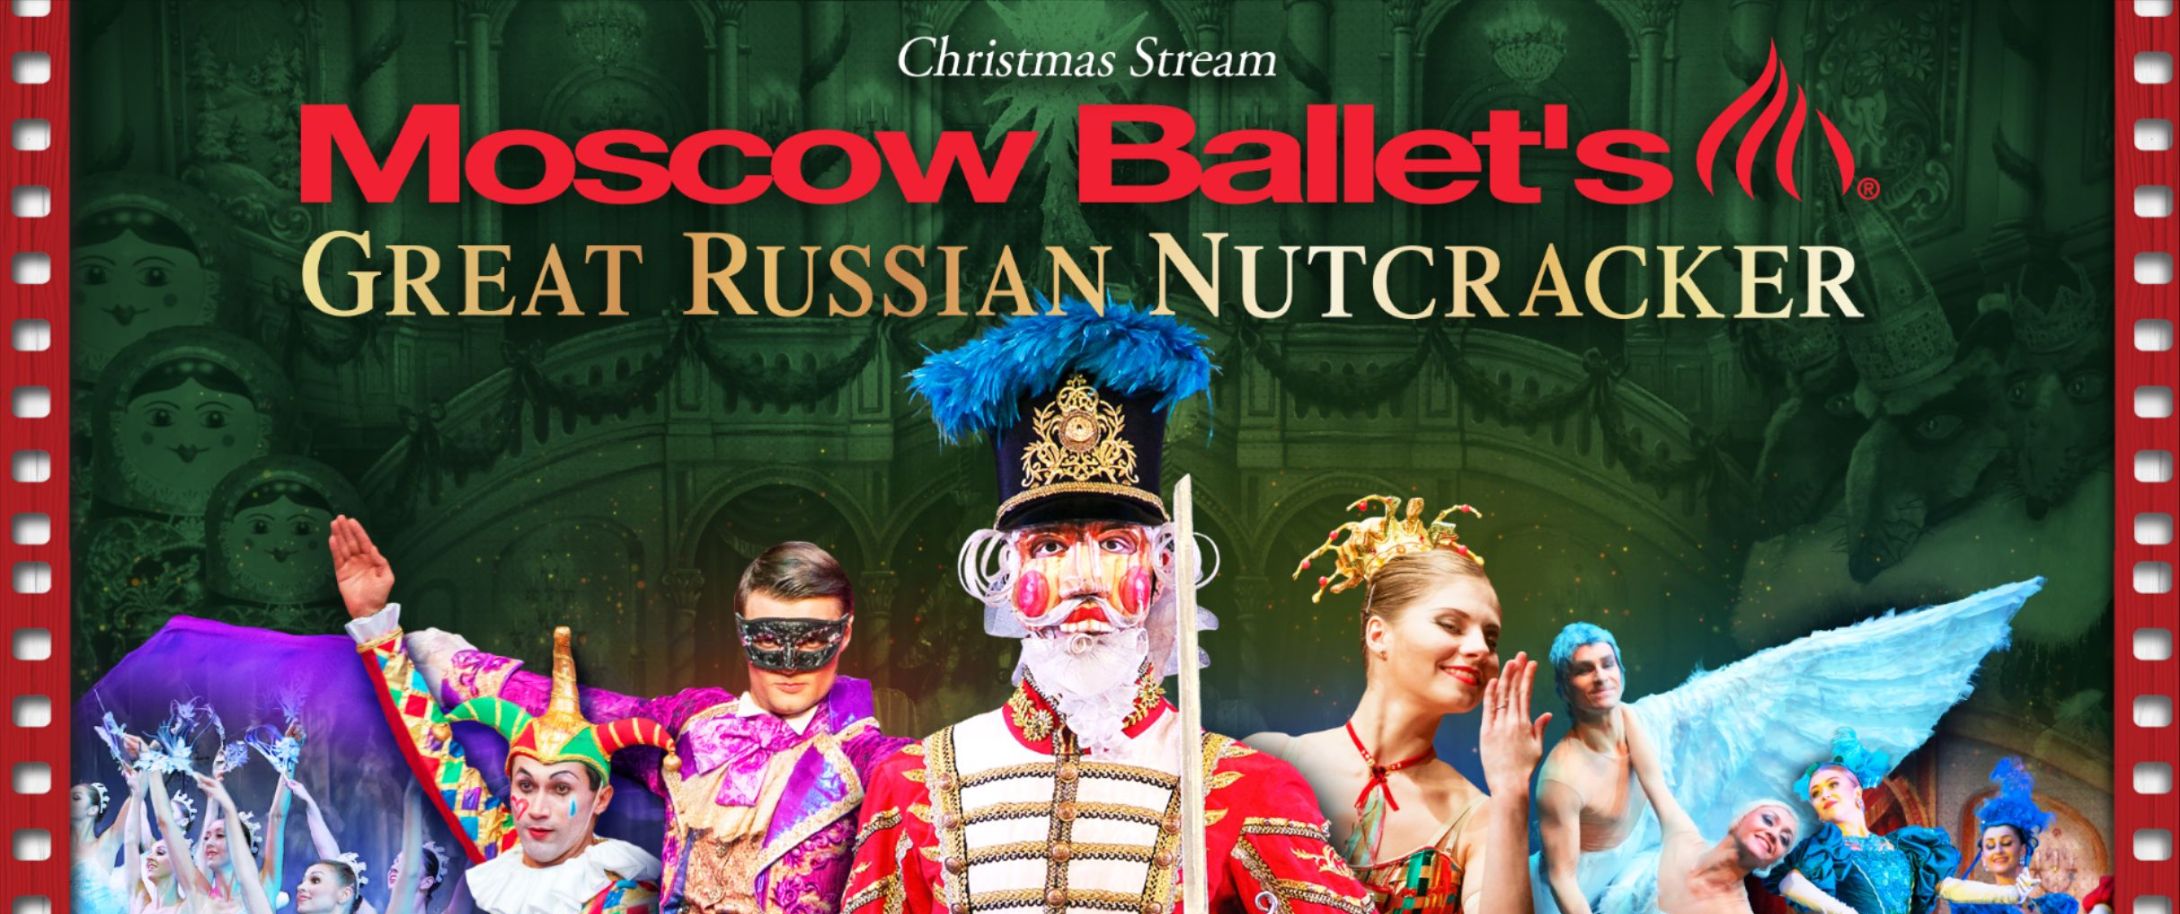 Moscow Ballet's Great Russian Nutcracker: Christmas Stream